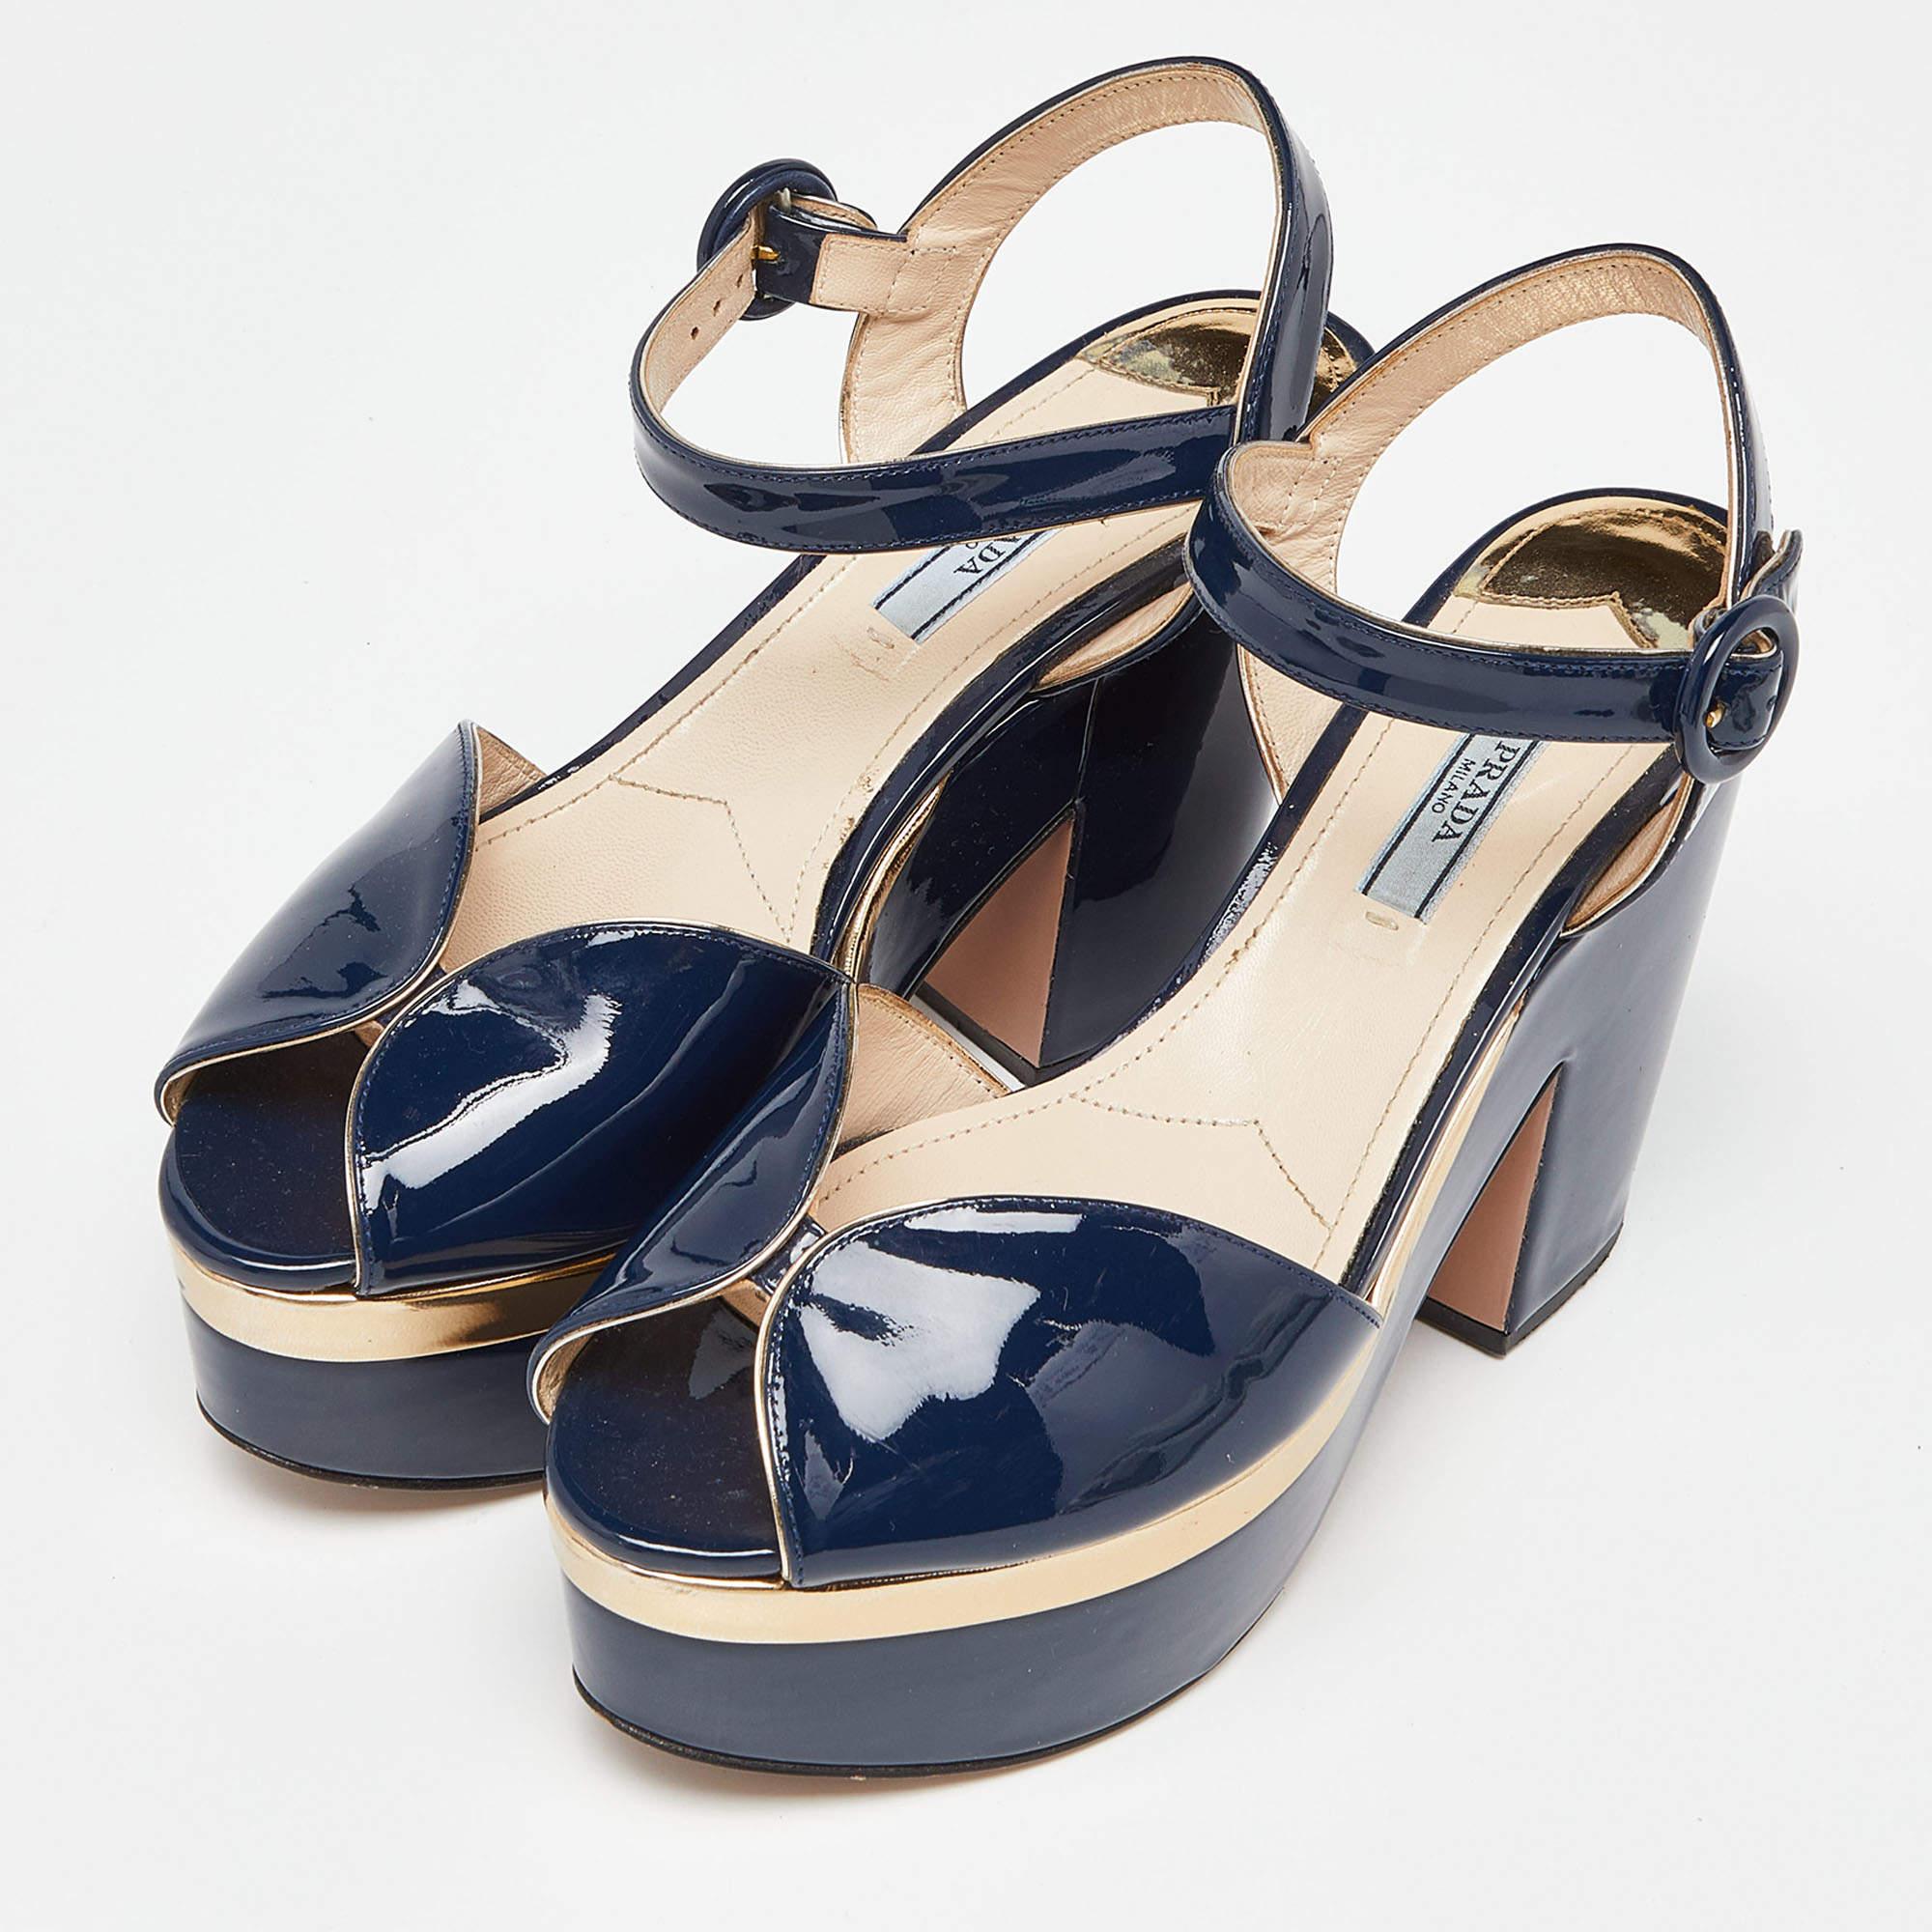 Women's Prada Navy Blue Patent Leather Platform Ankle Strap Sandals Size 38.5